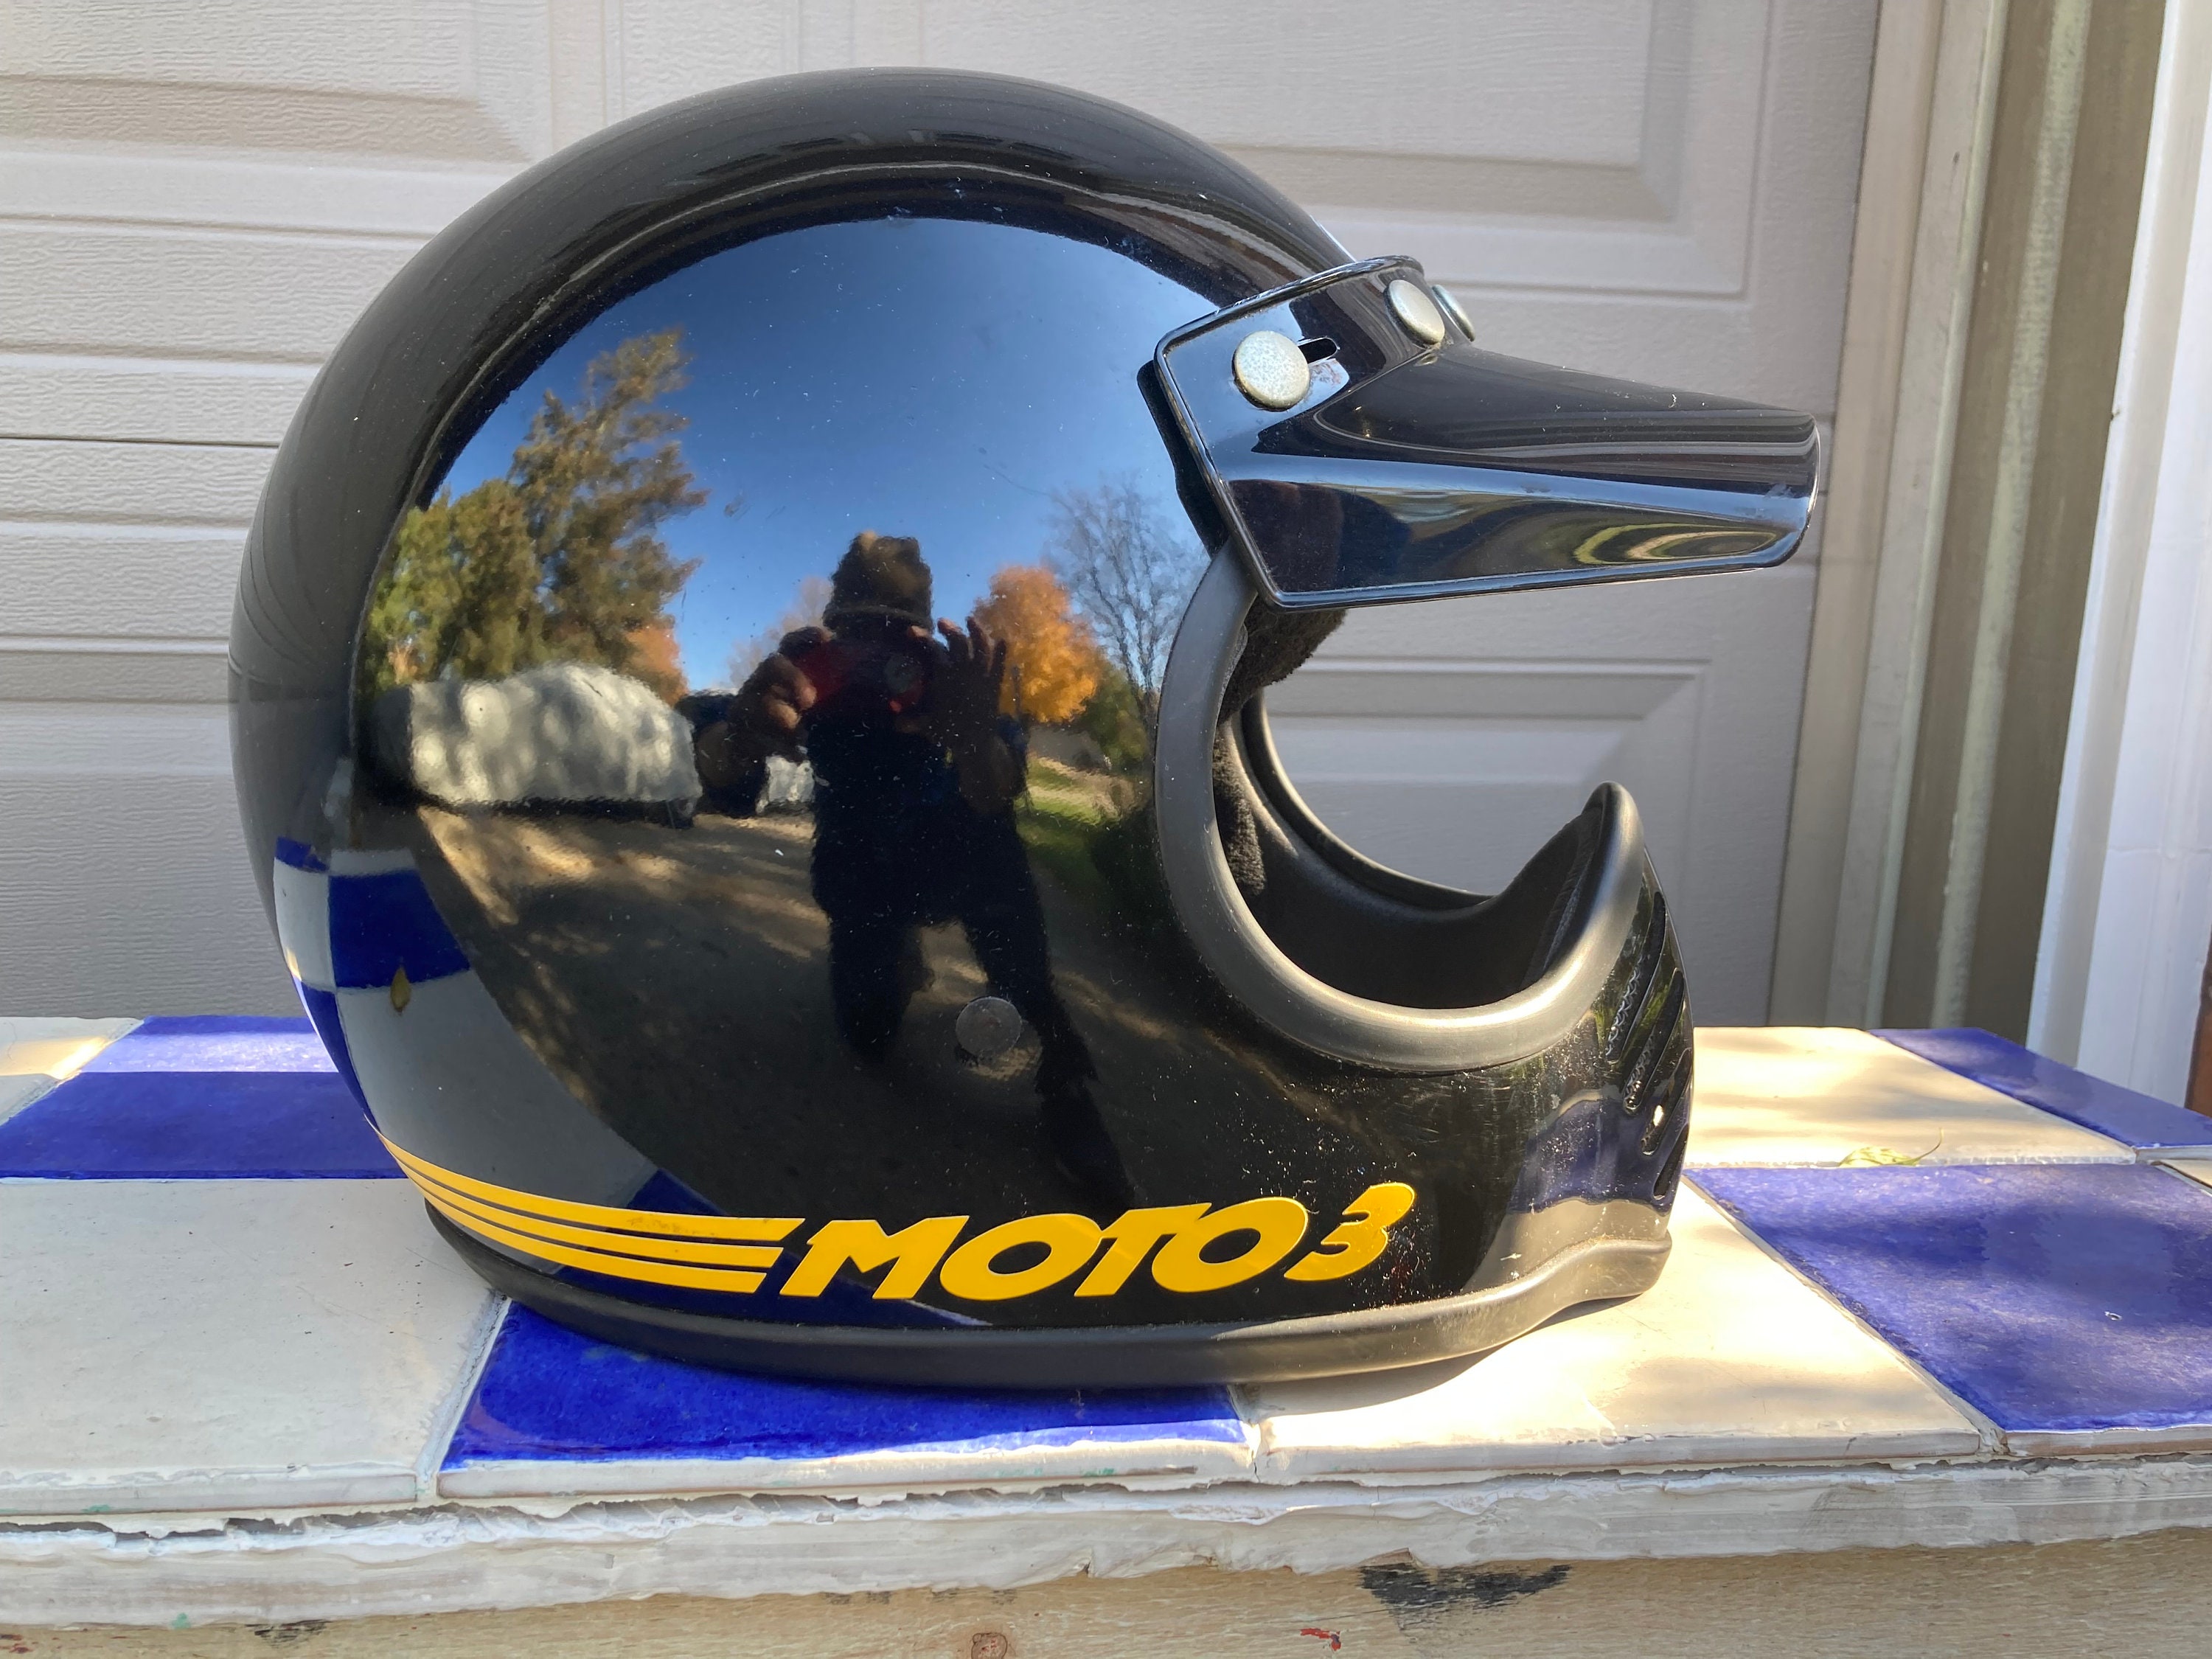 Casque Motcross Vintage Bell Helmets Moto 3 Matte Black